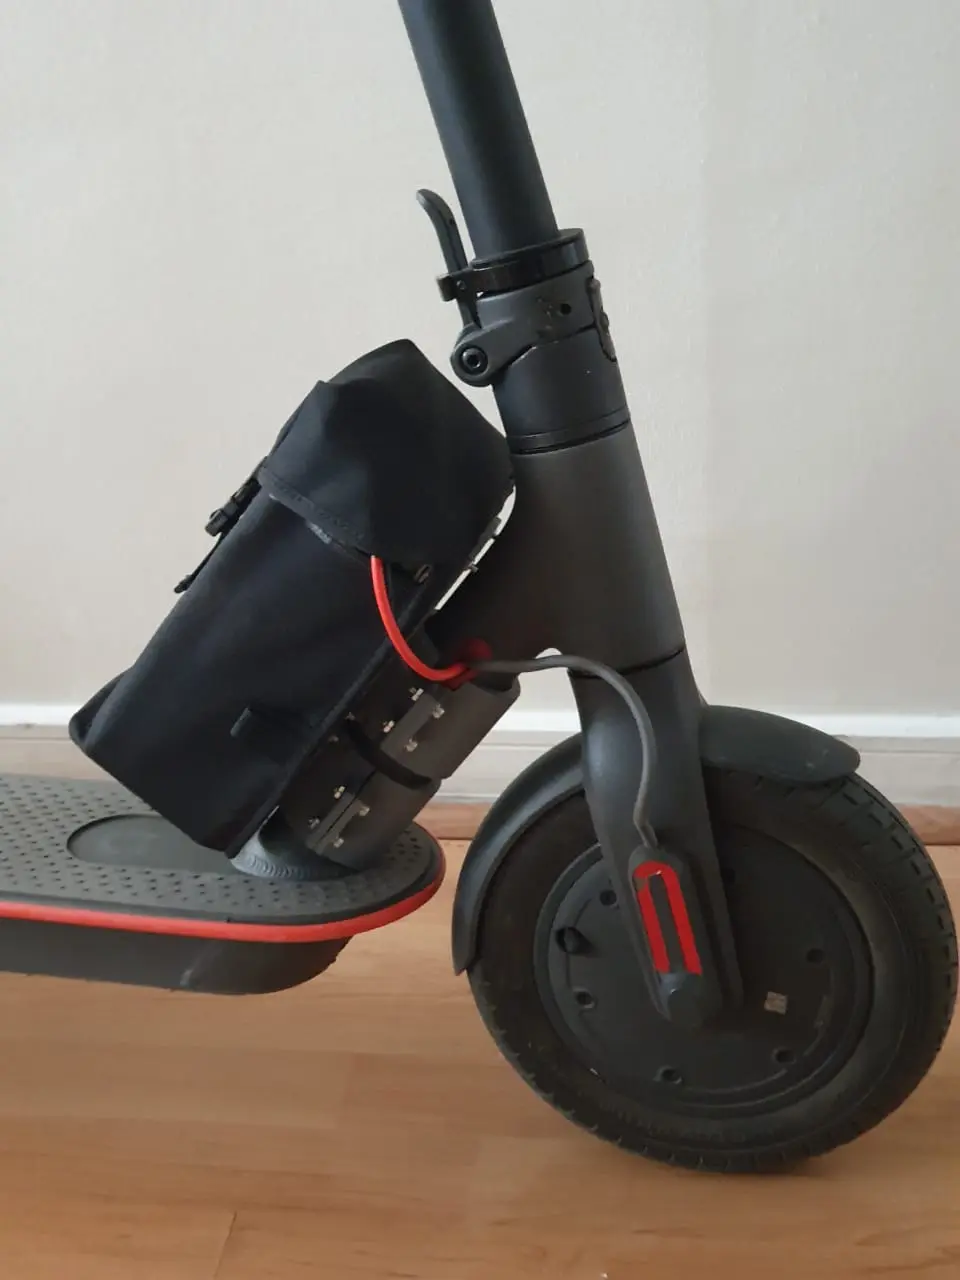 bateria externa para scooter electrico - Qué voltaje usa un scooter eléctrico